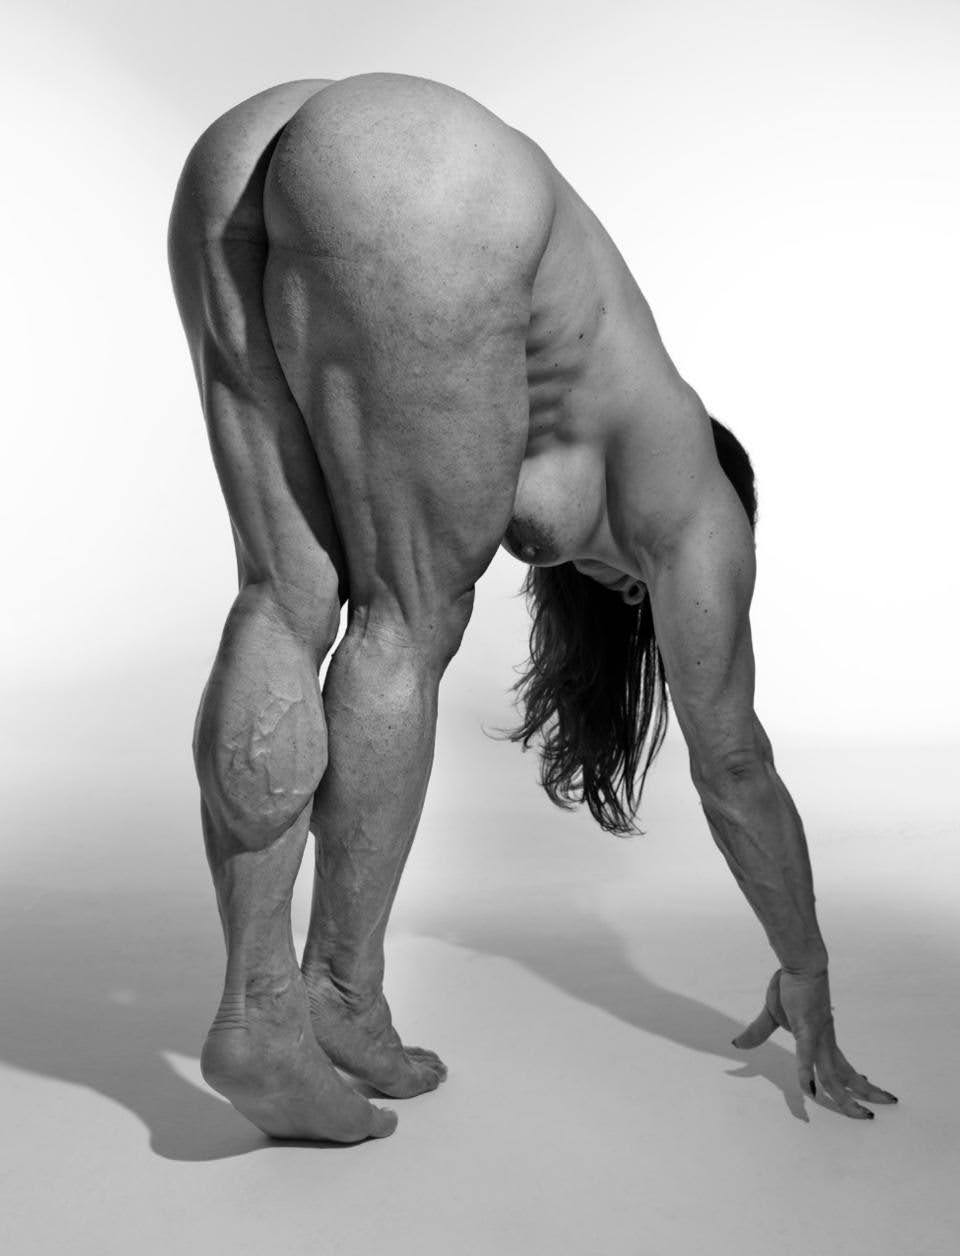 Fisiculturista Alê Grimaldi posa para ensaio de nu artístico em estúdio. Foto: Andre Arruda